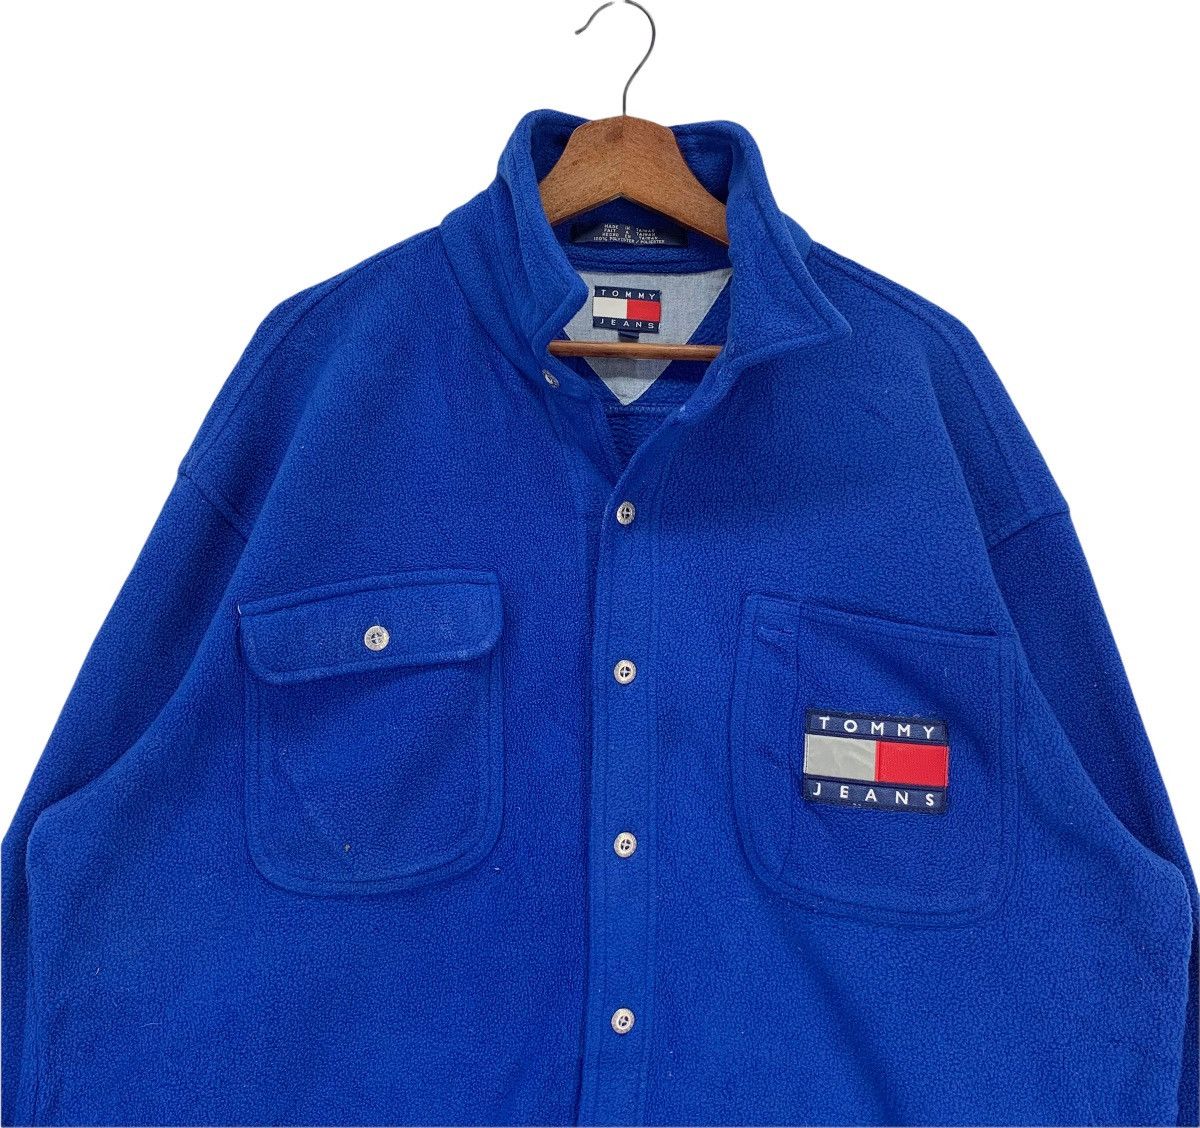 Vintage Vintage Tommy Hilfiger Sportswear Fleece Sweater Size US L / EU 52-54 / 3 - 3 Thumbnail